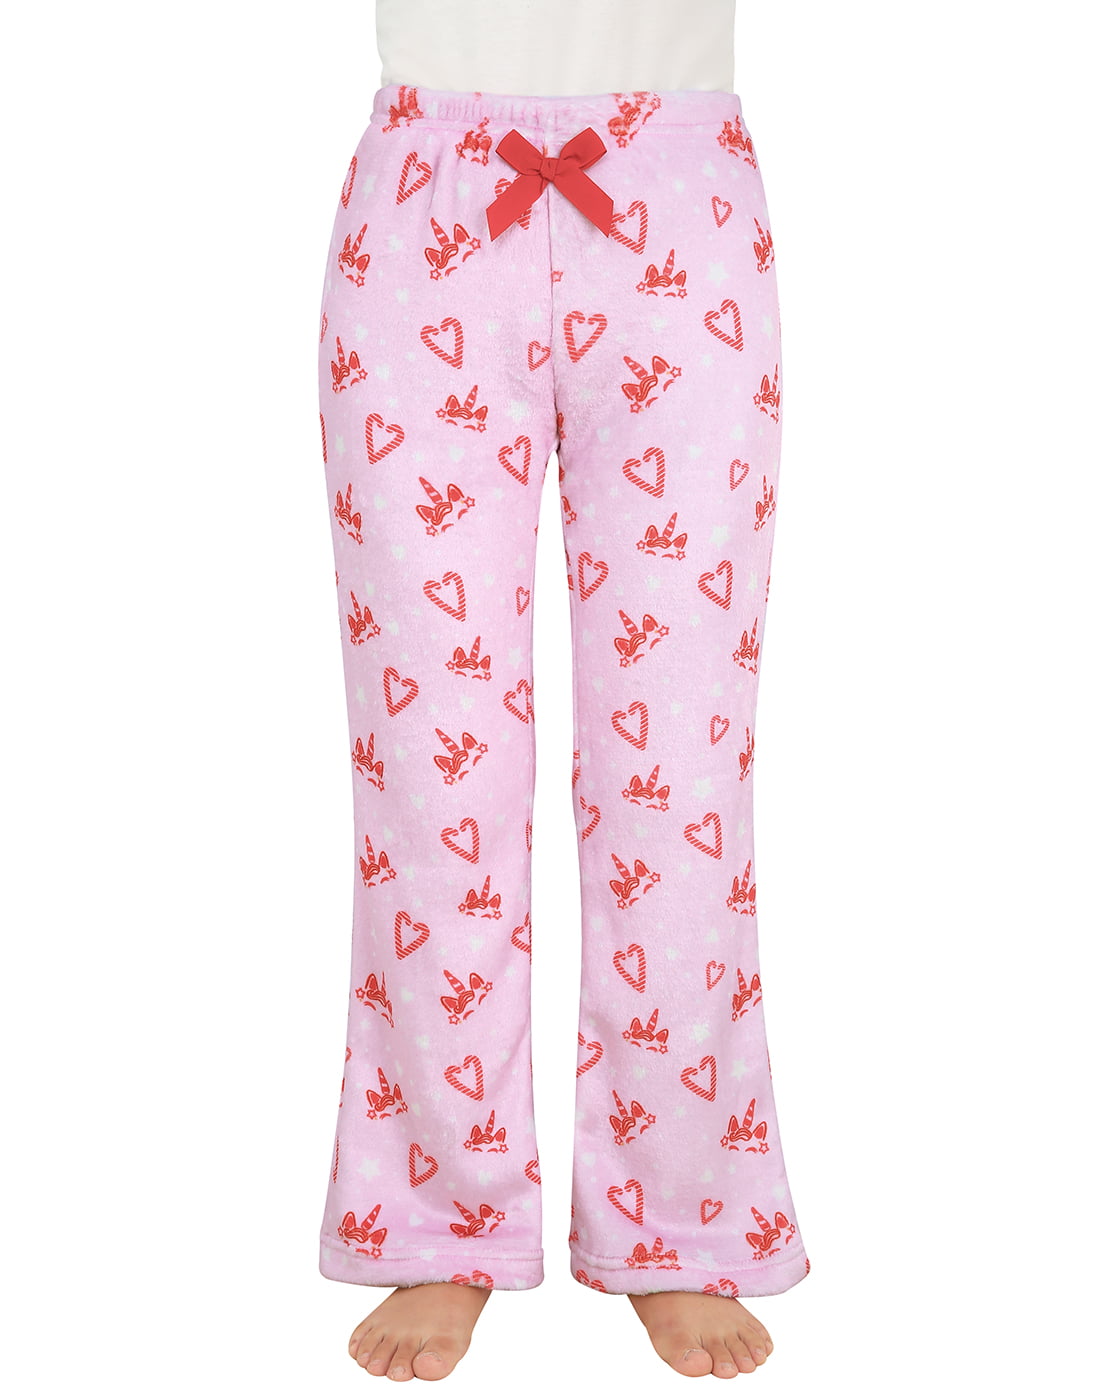 HDE Girl's Fleece Pajama Pants Kids Soft Sleepwear Casual Fuzzy Plush PJ Bottoms 